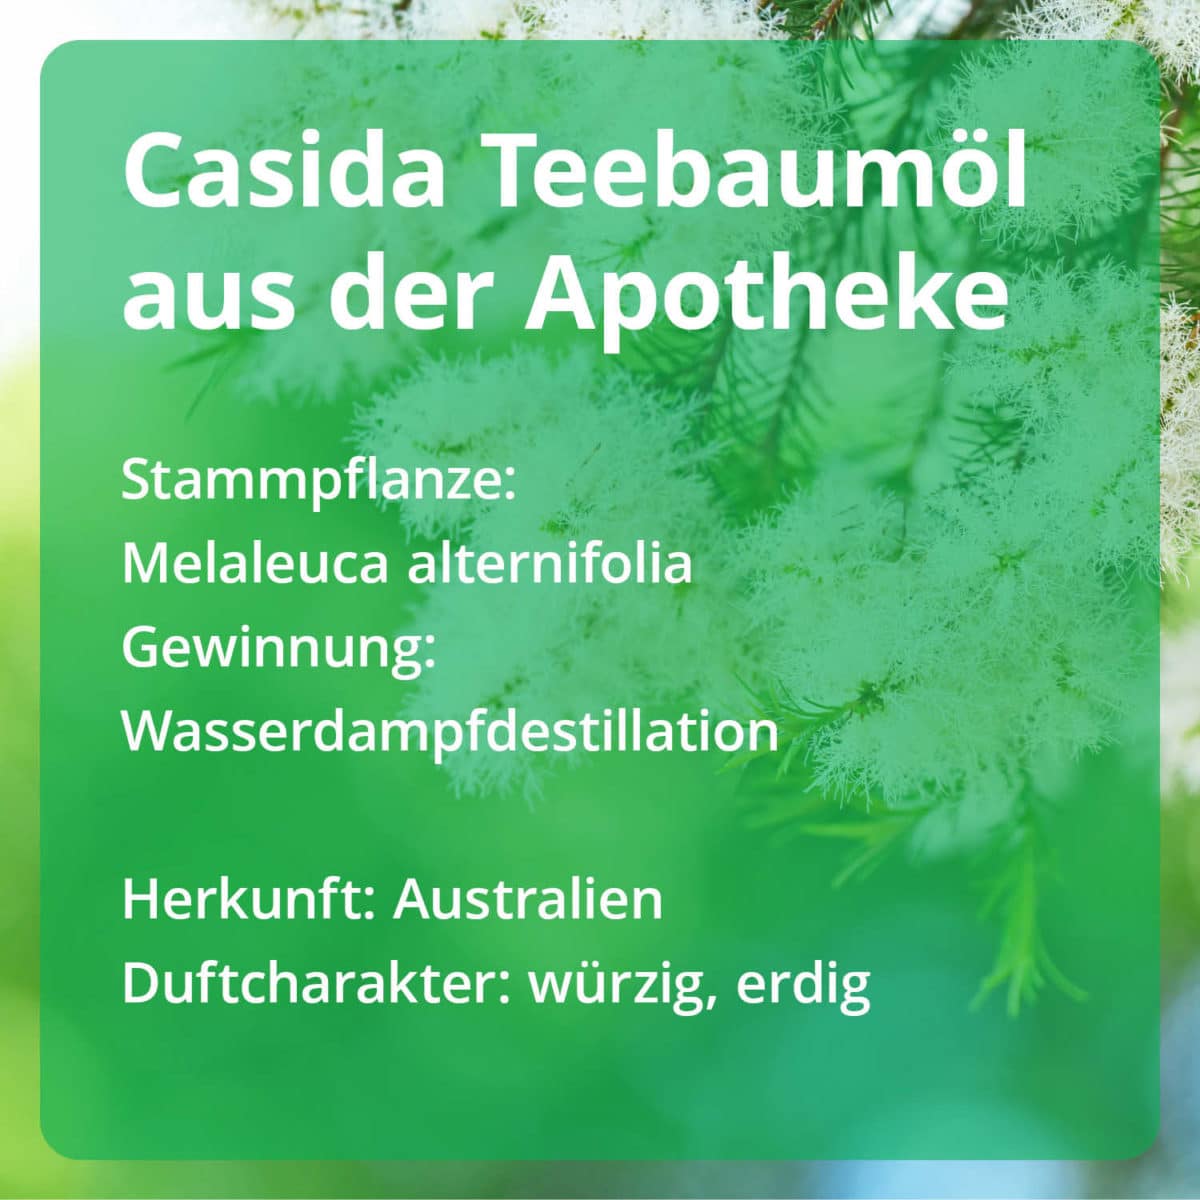 Casida Tea Tree Oil naturrein – 10 ml 15880774 PZN Apotheke ätherische Öle Melaleuca alternifolia Hautpflege Nagelpilz3